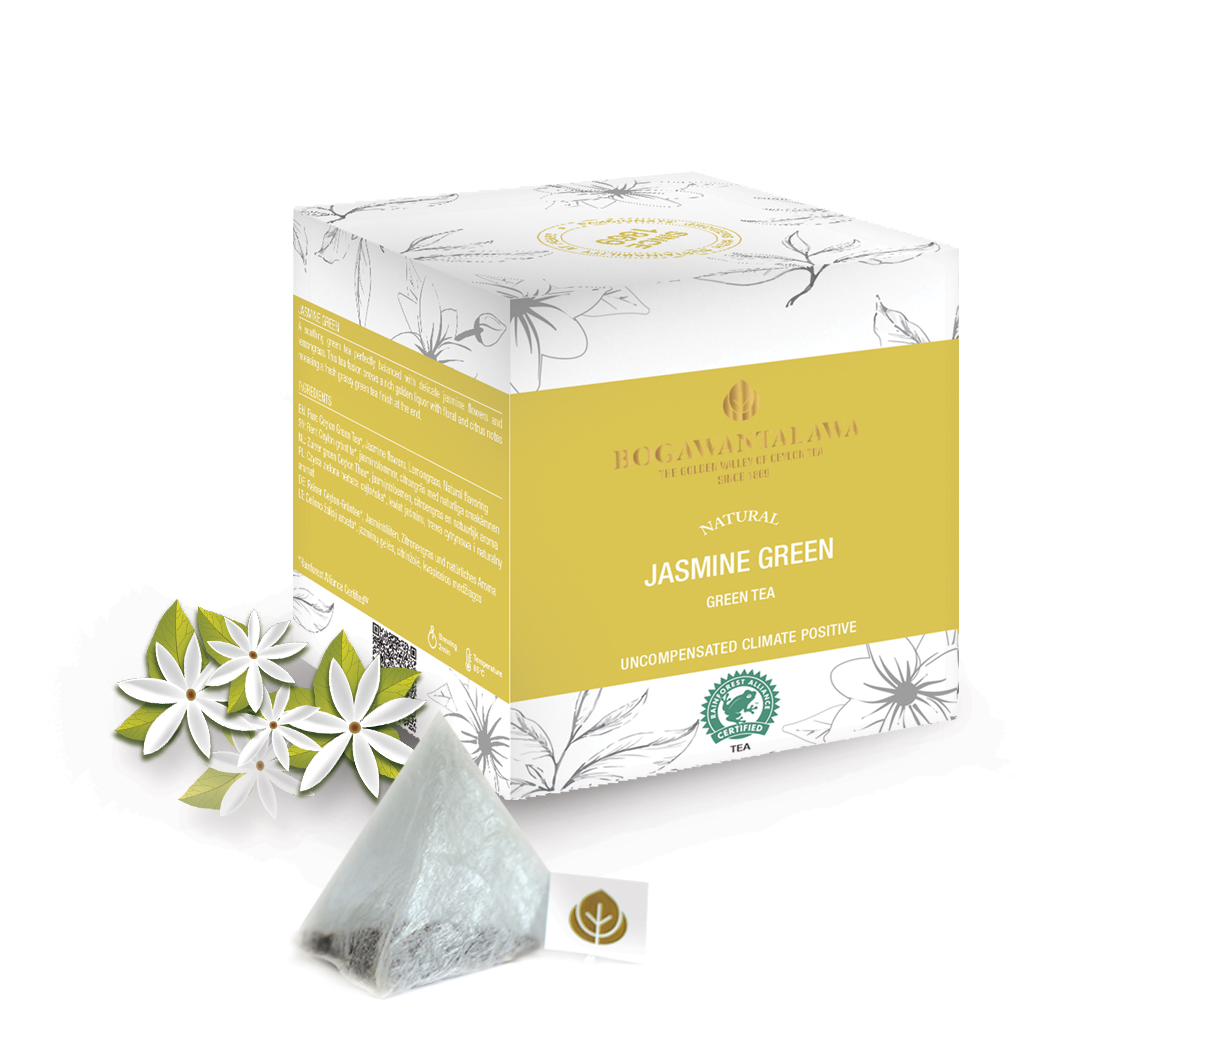 Bogawantalawa All-Natural Jasmine Green 2g x 20 Pyramid Tea Bags